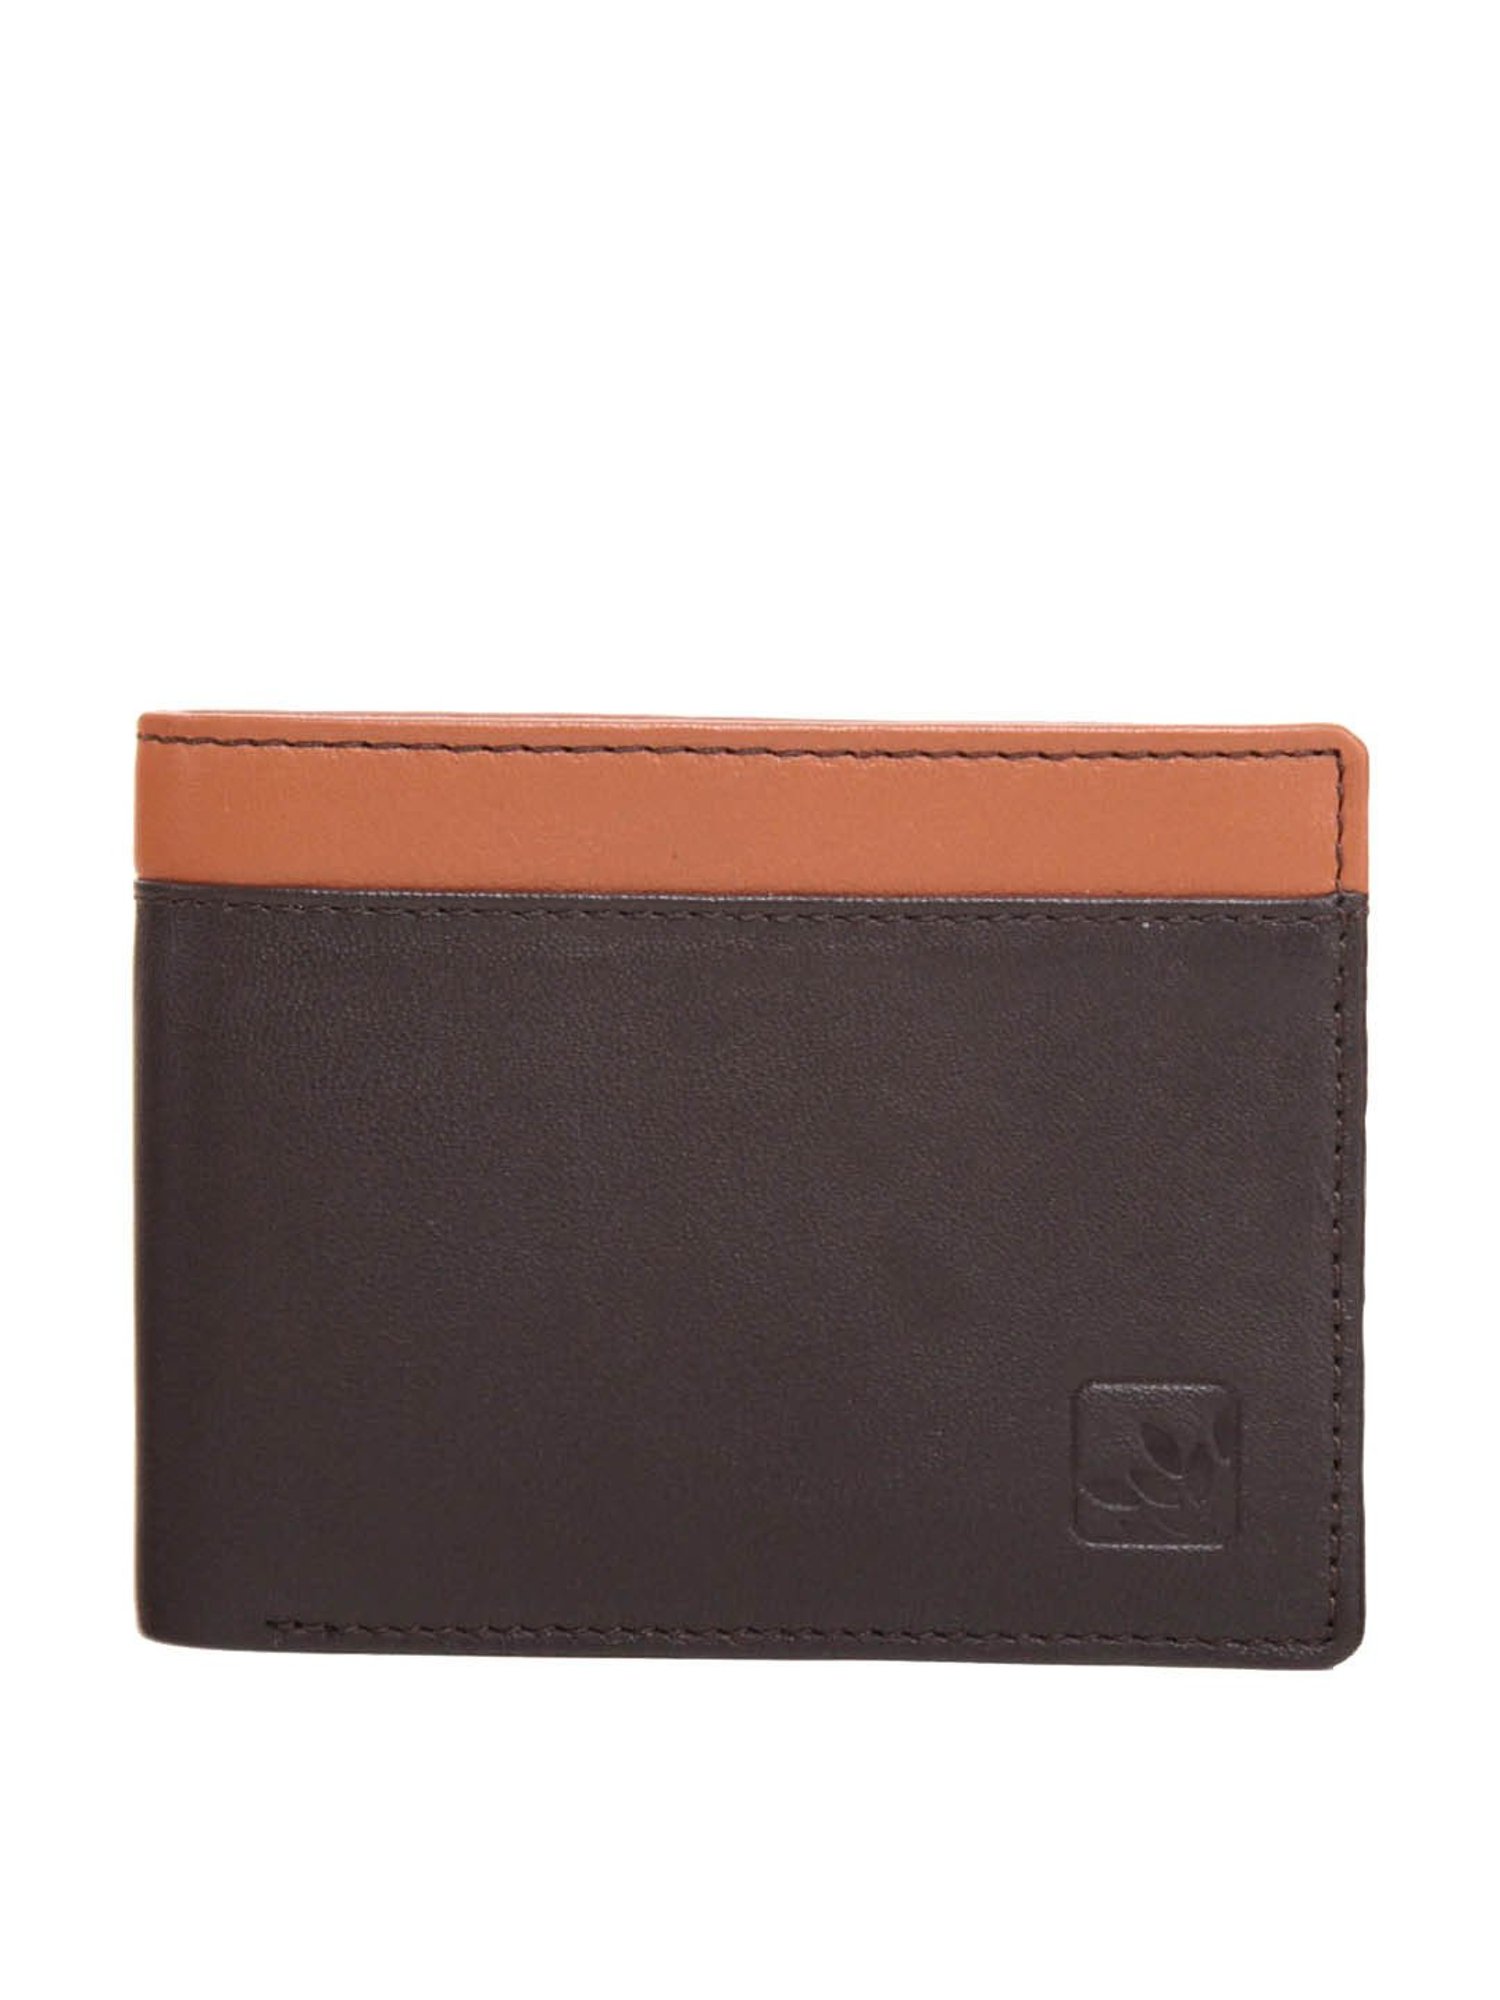 Branded wallet genuine leather wallet mens wallet,napa hide wallet, for men  leather wallet under 200